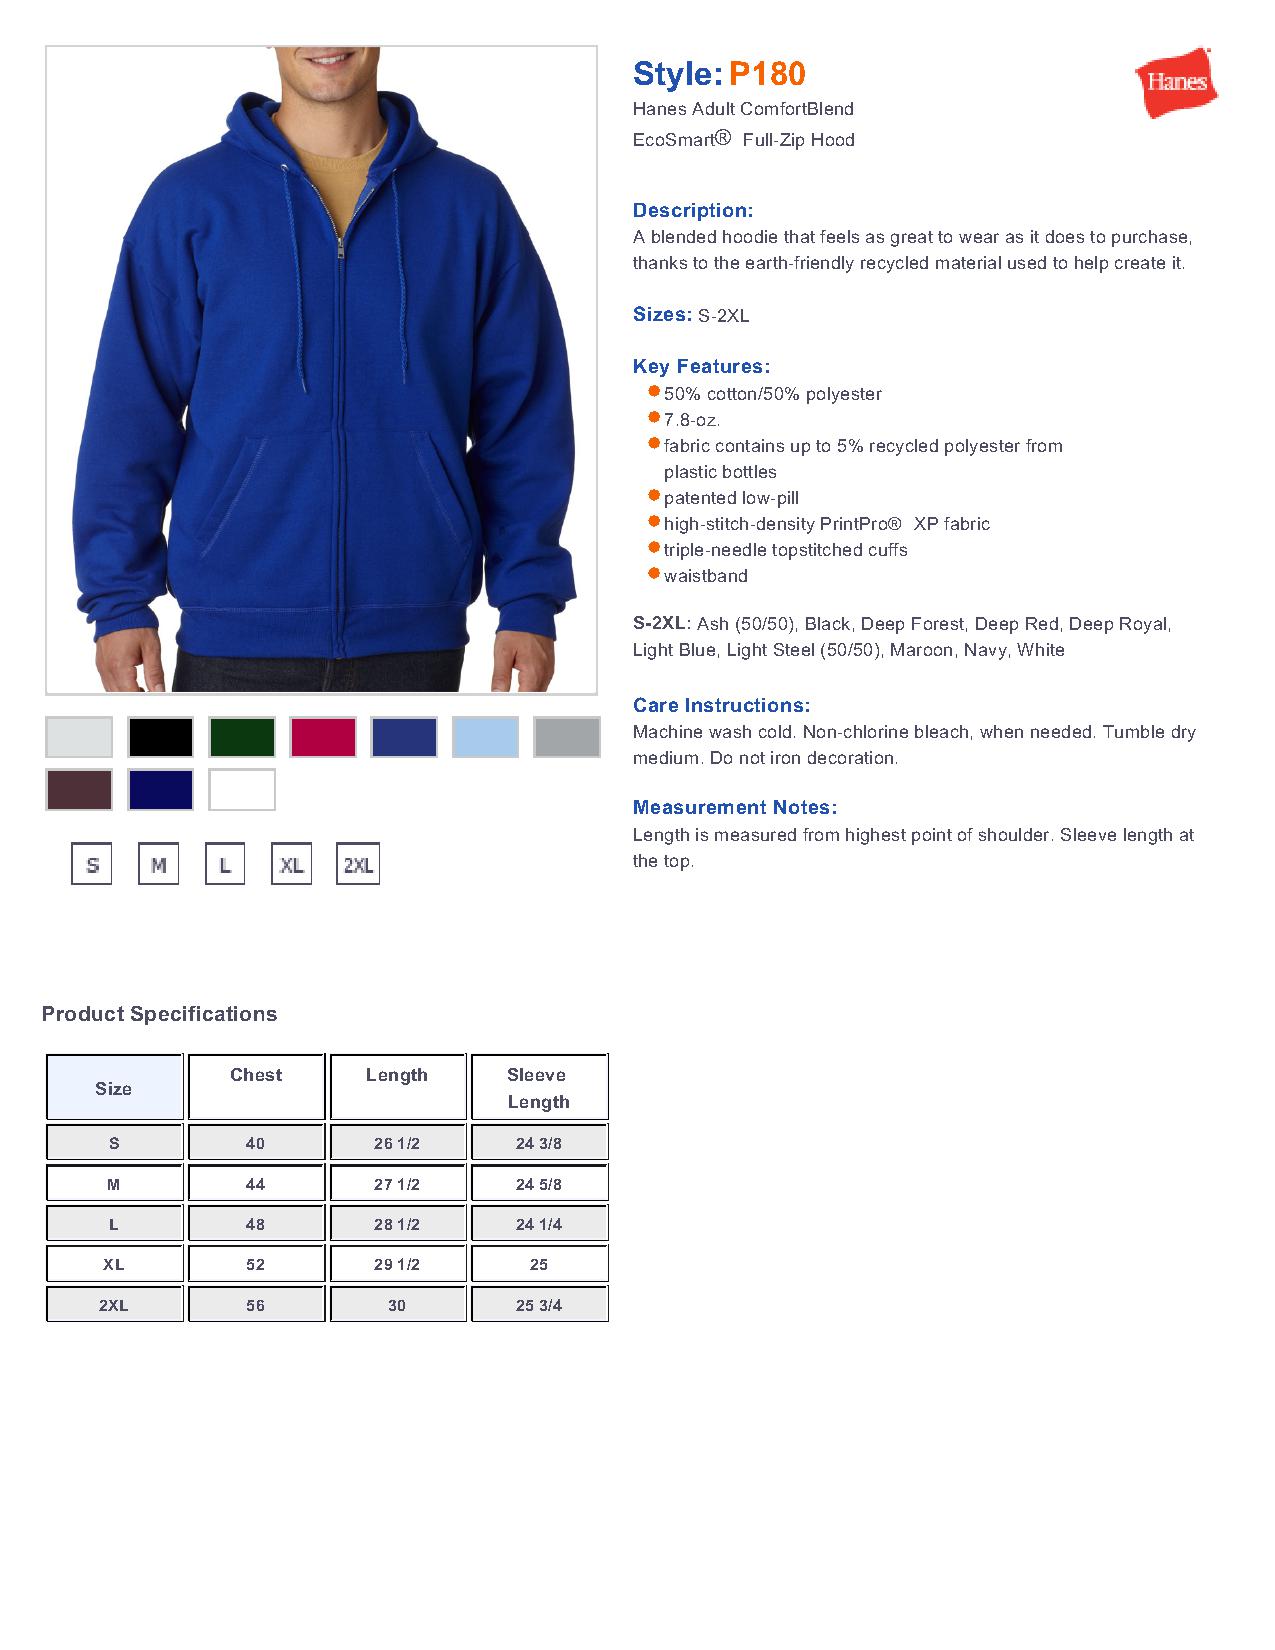 Hanes P180 - Adult ComfortBlend EcoSmart Full-Zip Hooded Pullover $18.77 -  Sweatshirts